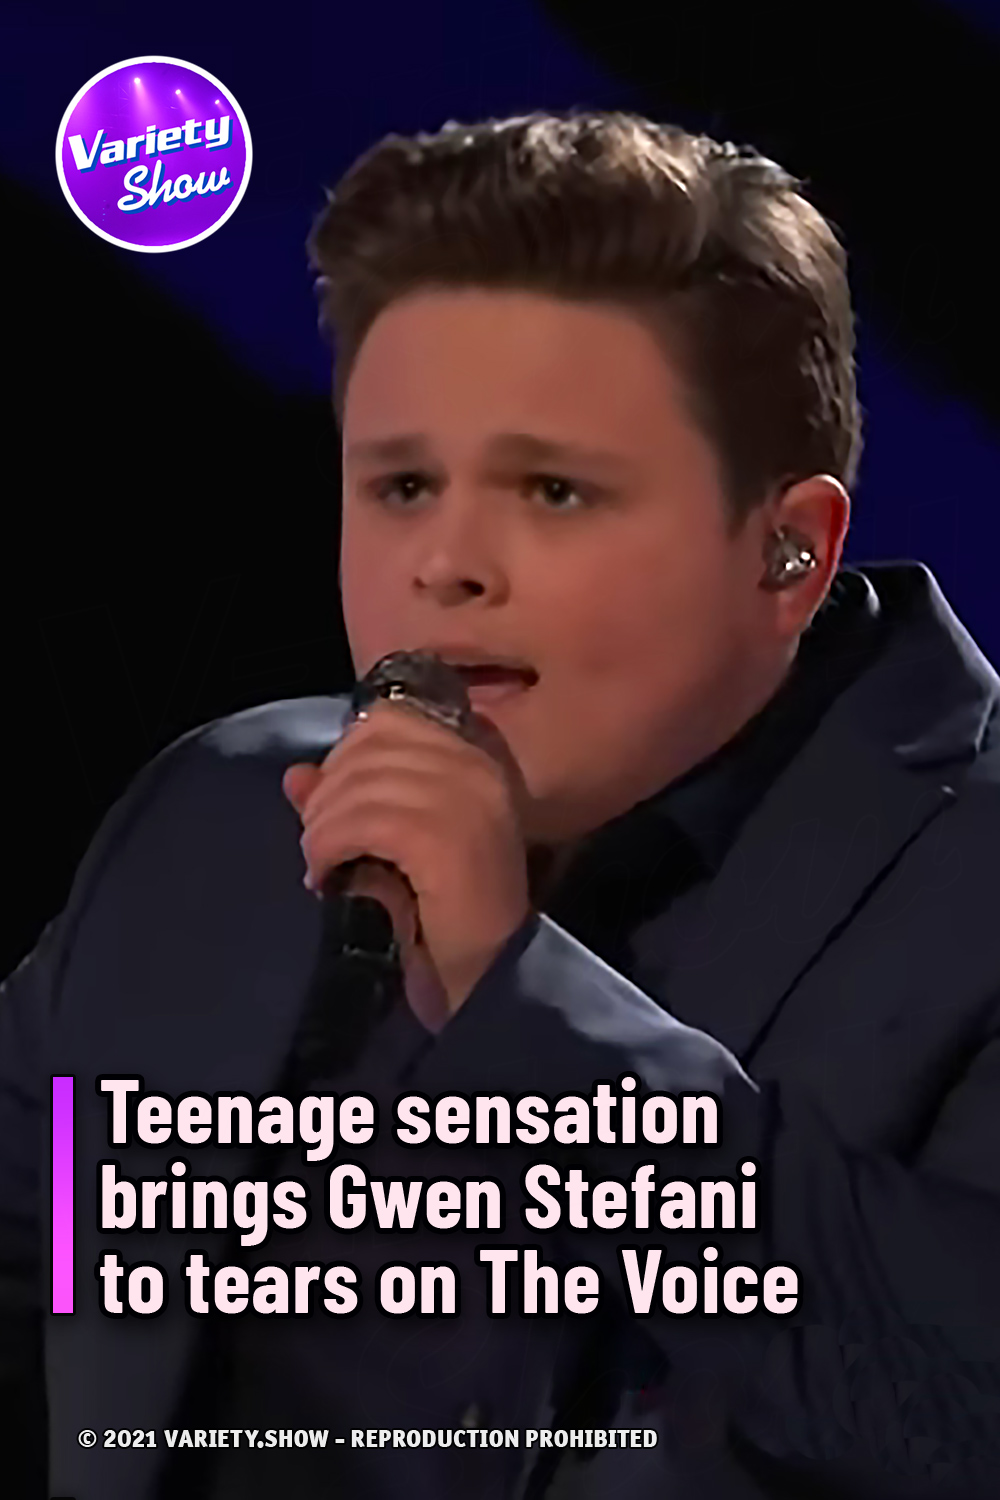 Teenage sensation brings Gwen Stefani to tears on The Voice